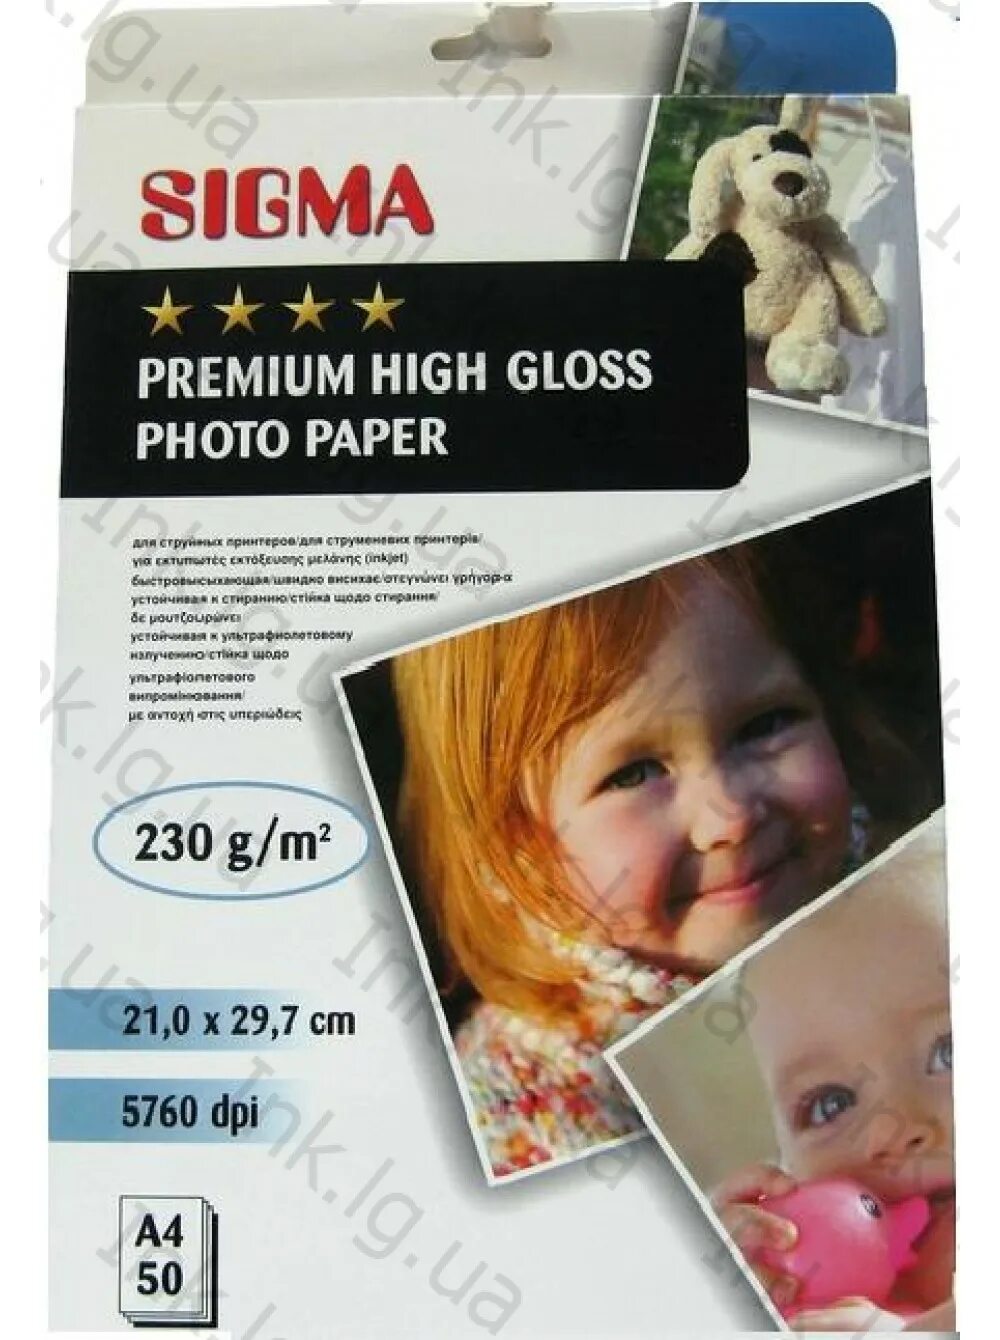 Сигма премиум. Sigma photo paper High Gloss бумага фото. Купить фотобумагу Sigma в Самаре.